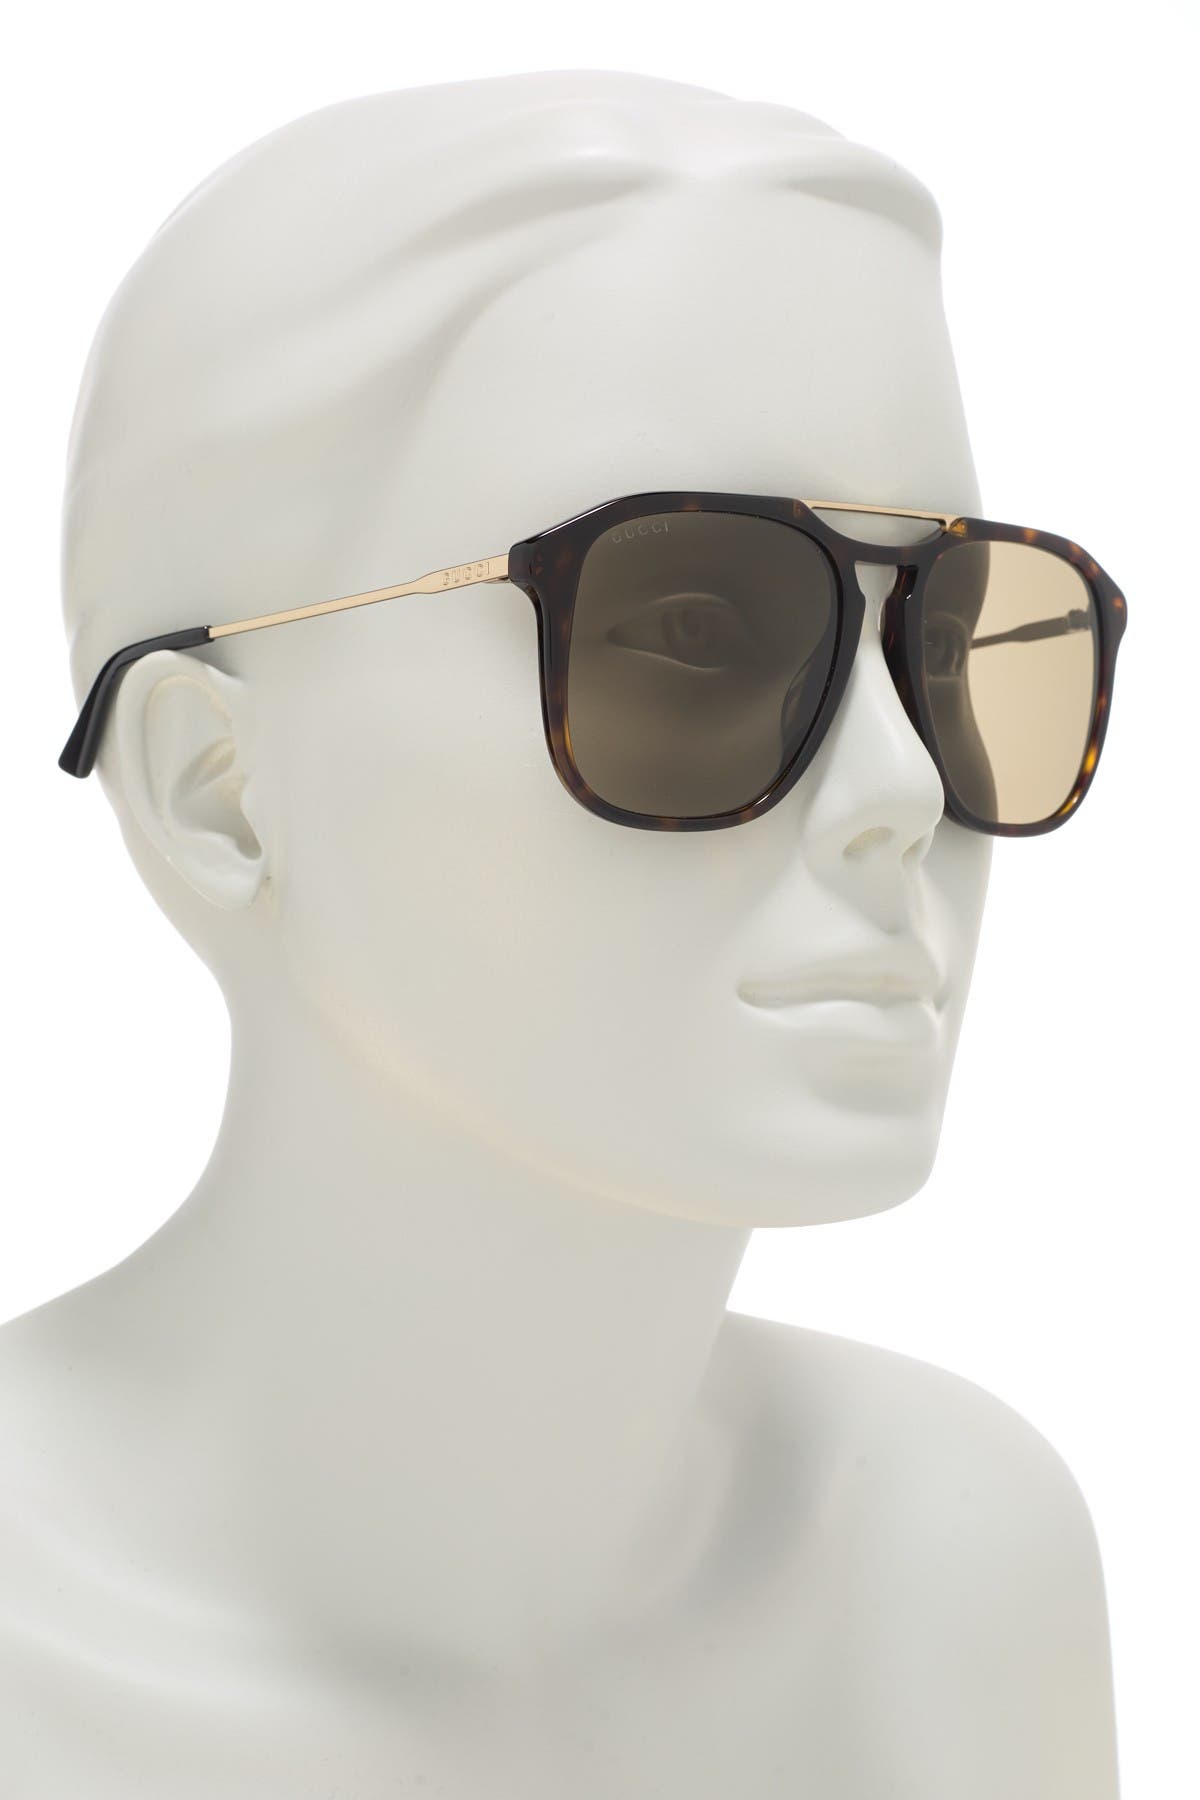 gucci brow bar sunglasses